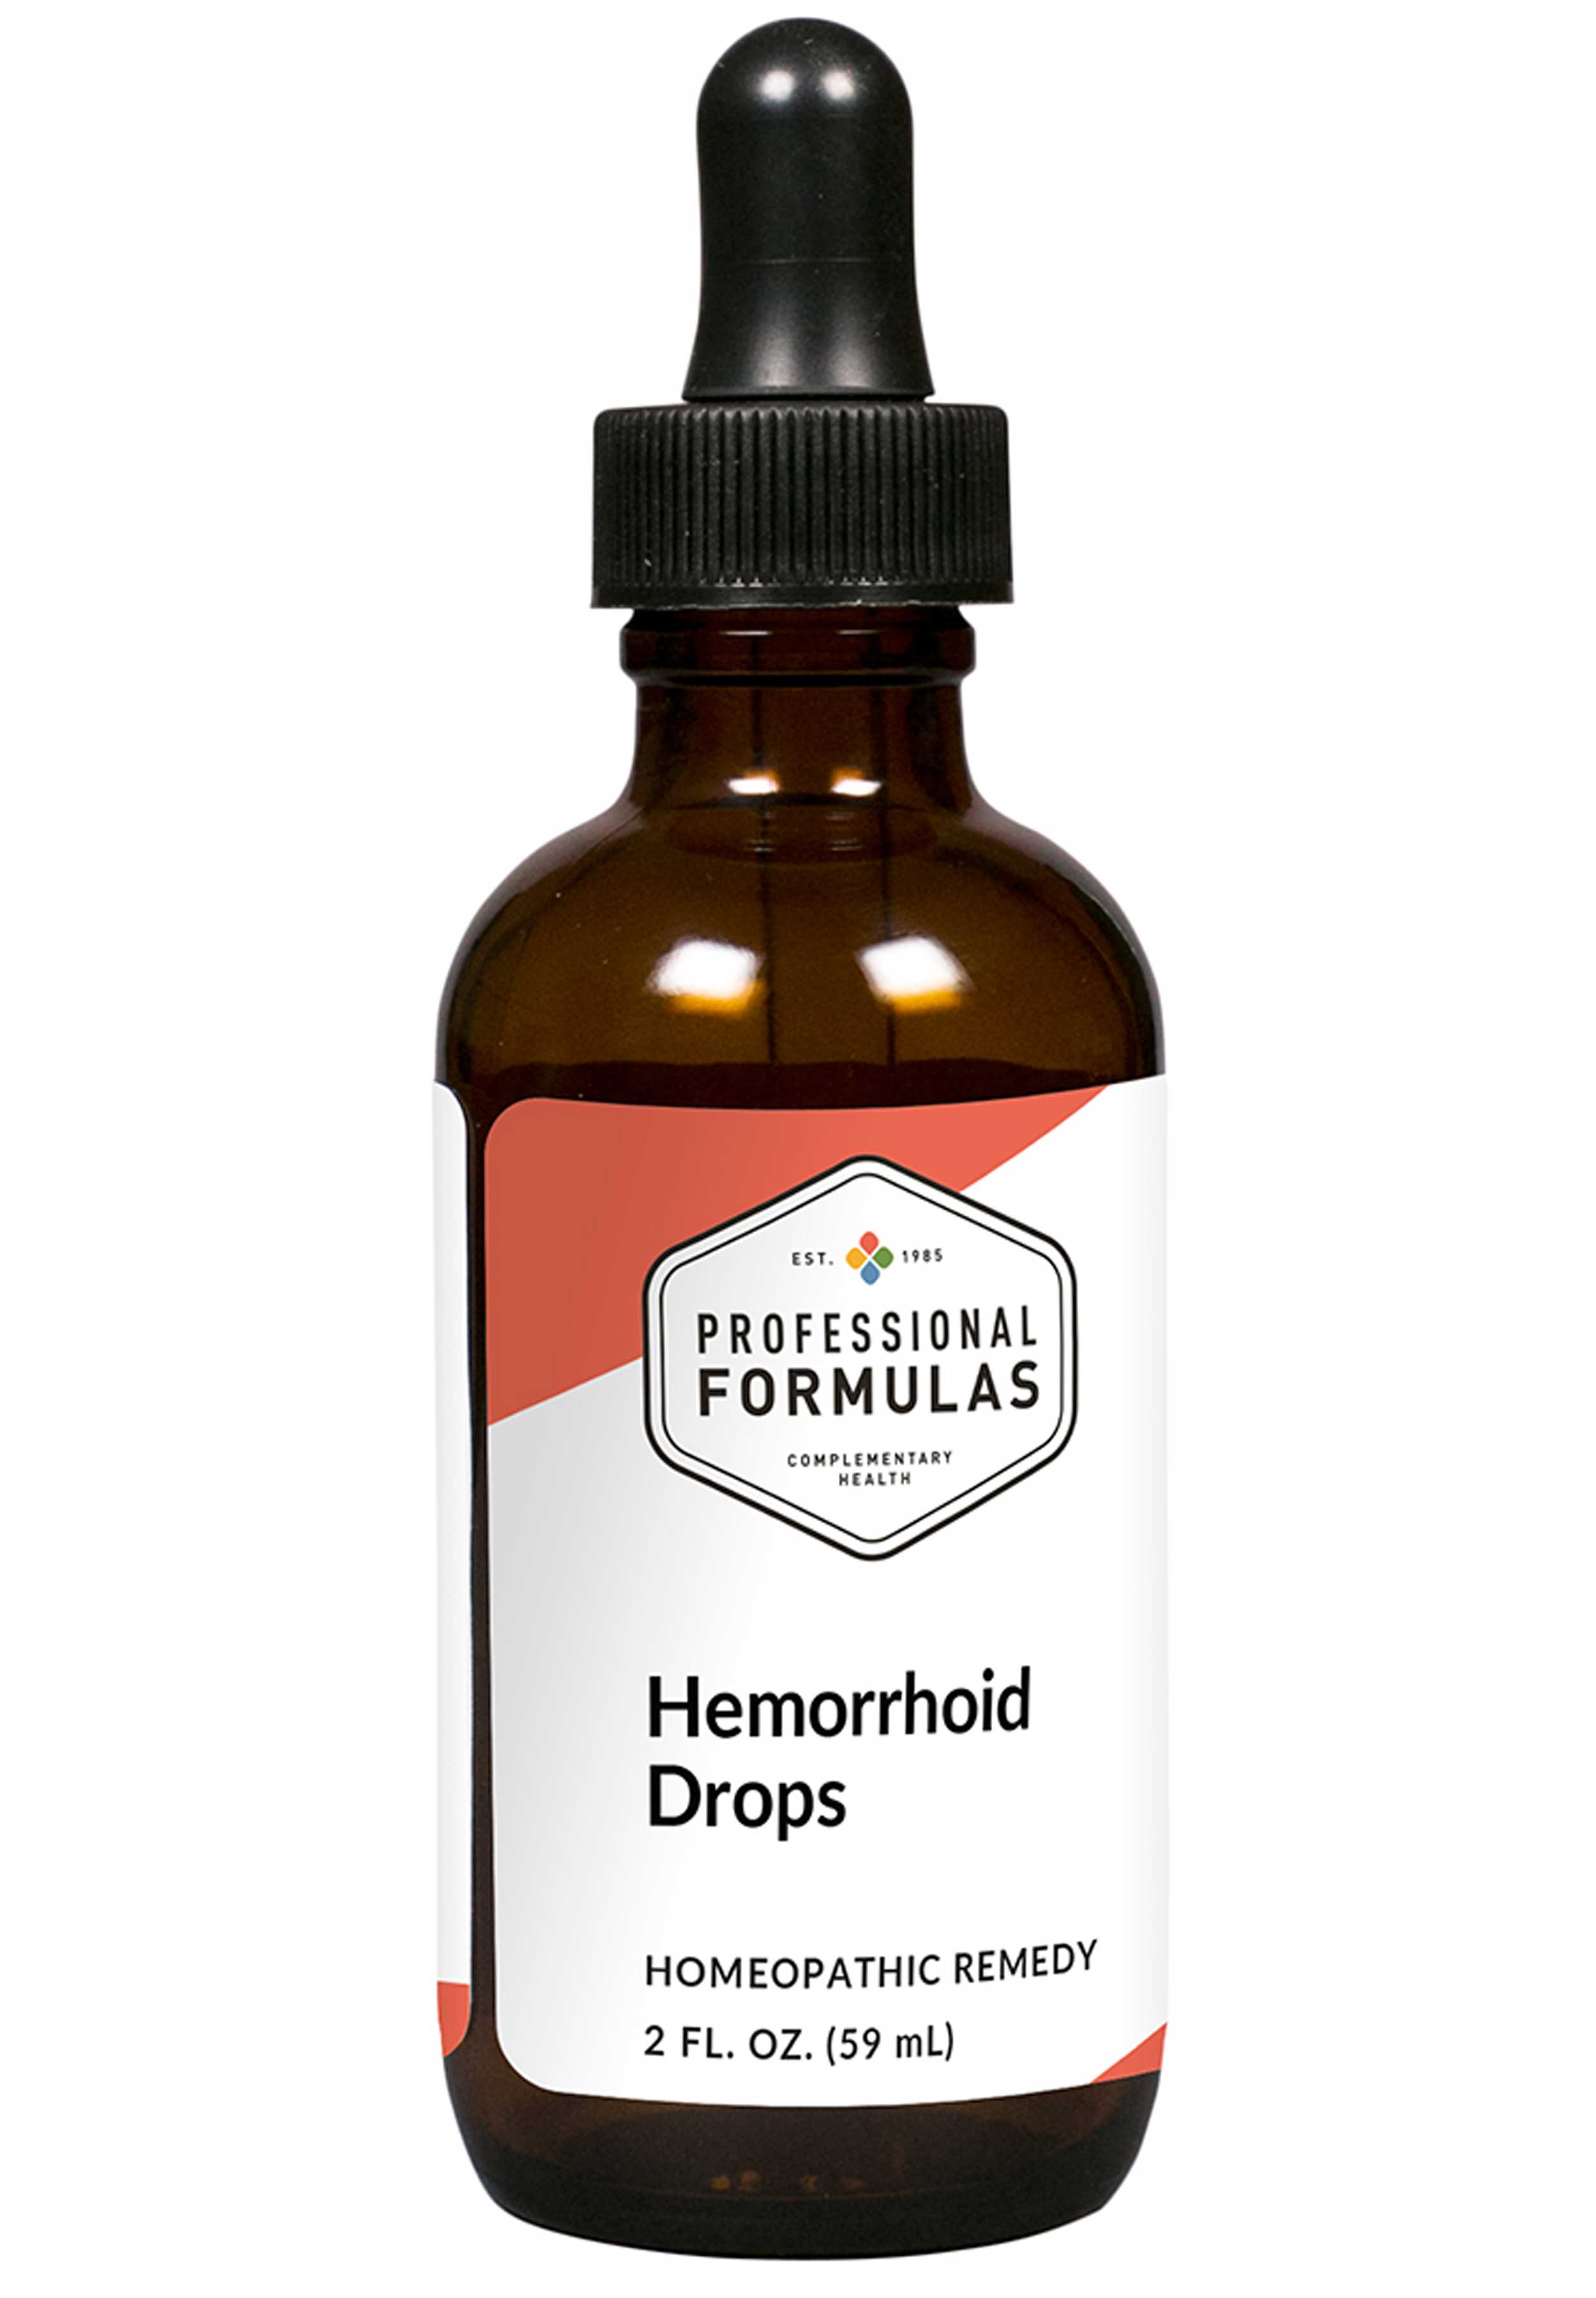 Professional Formulas Hemorrhoid Drops